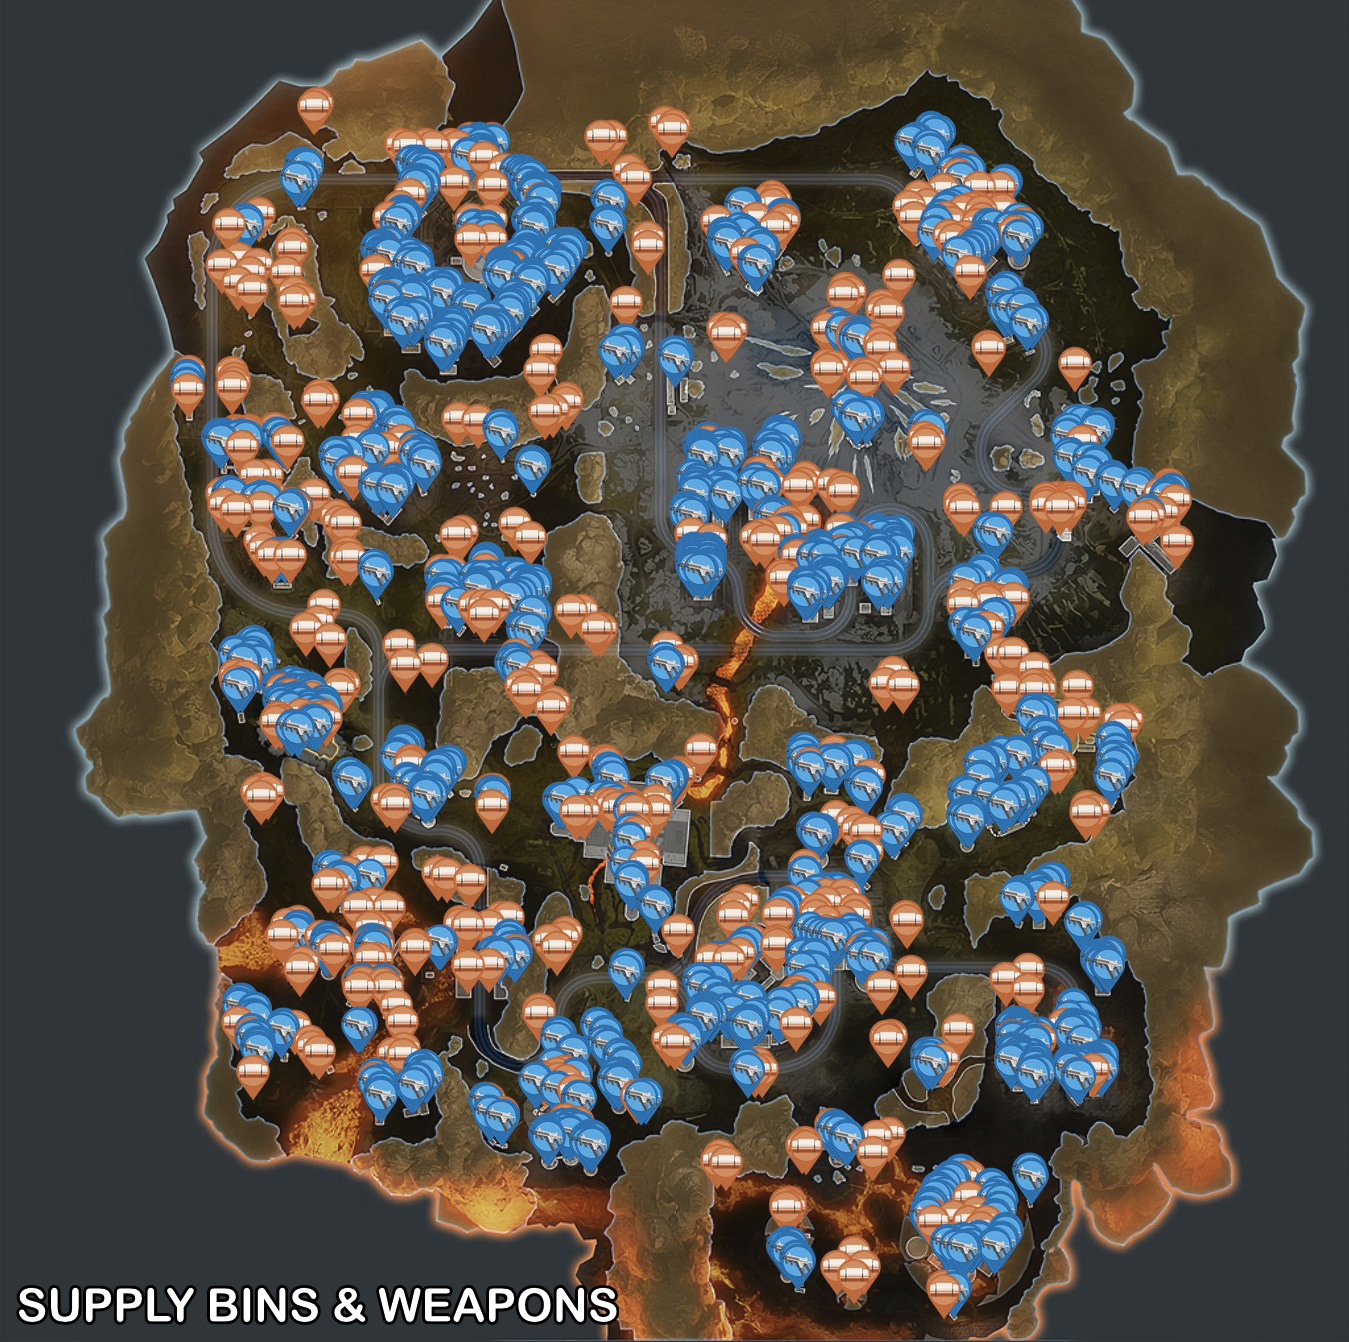 minecraft apex legends map